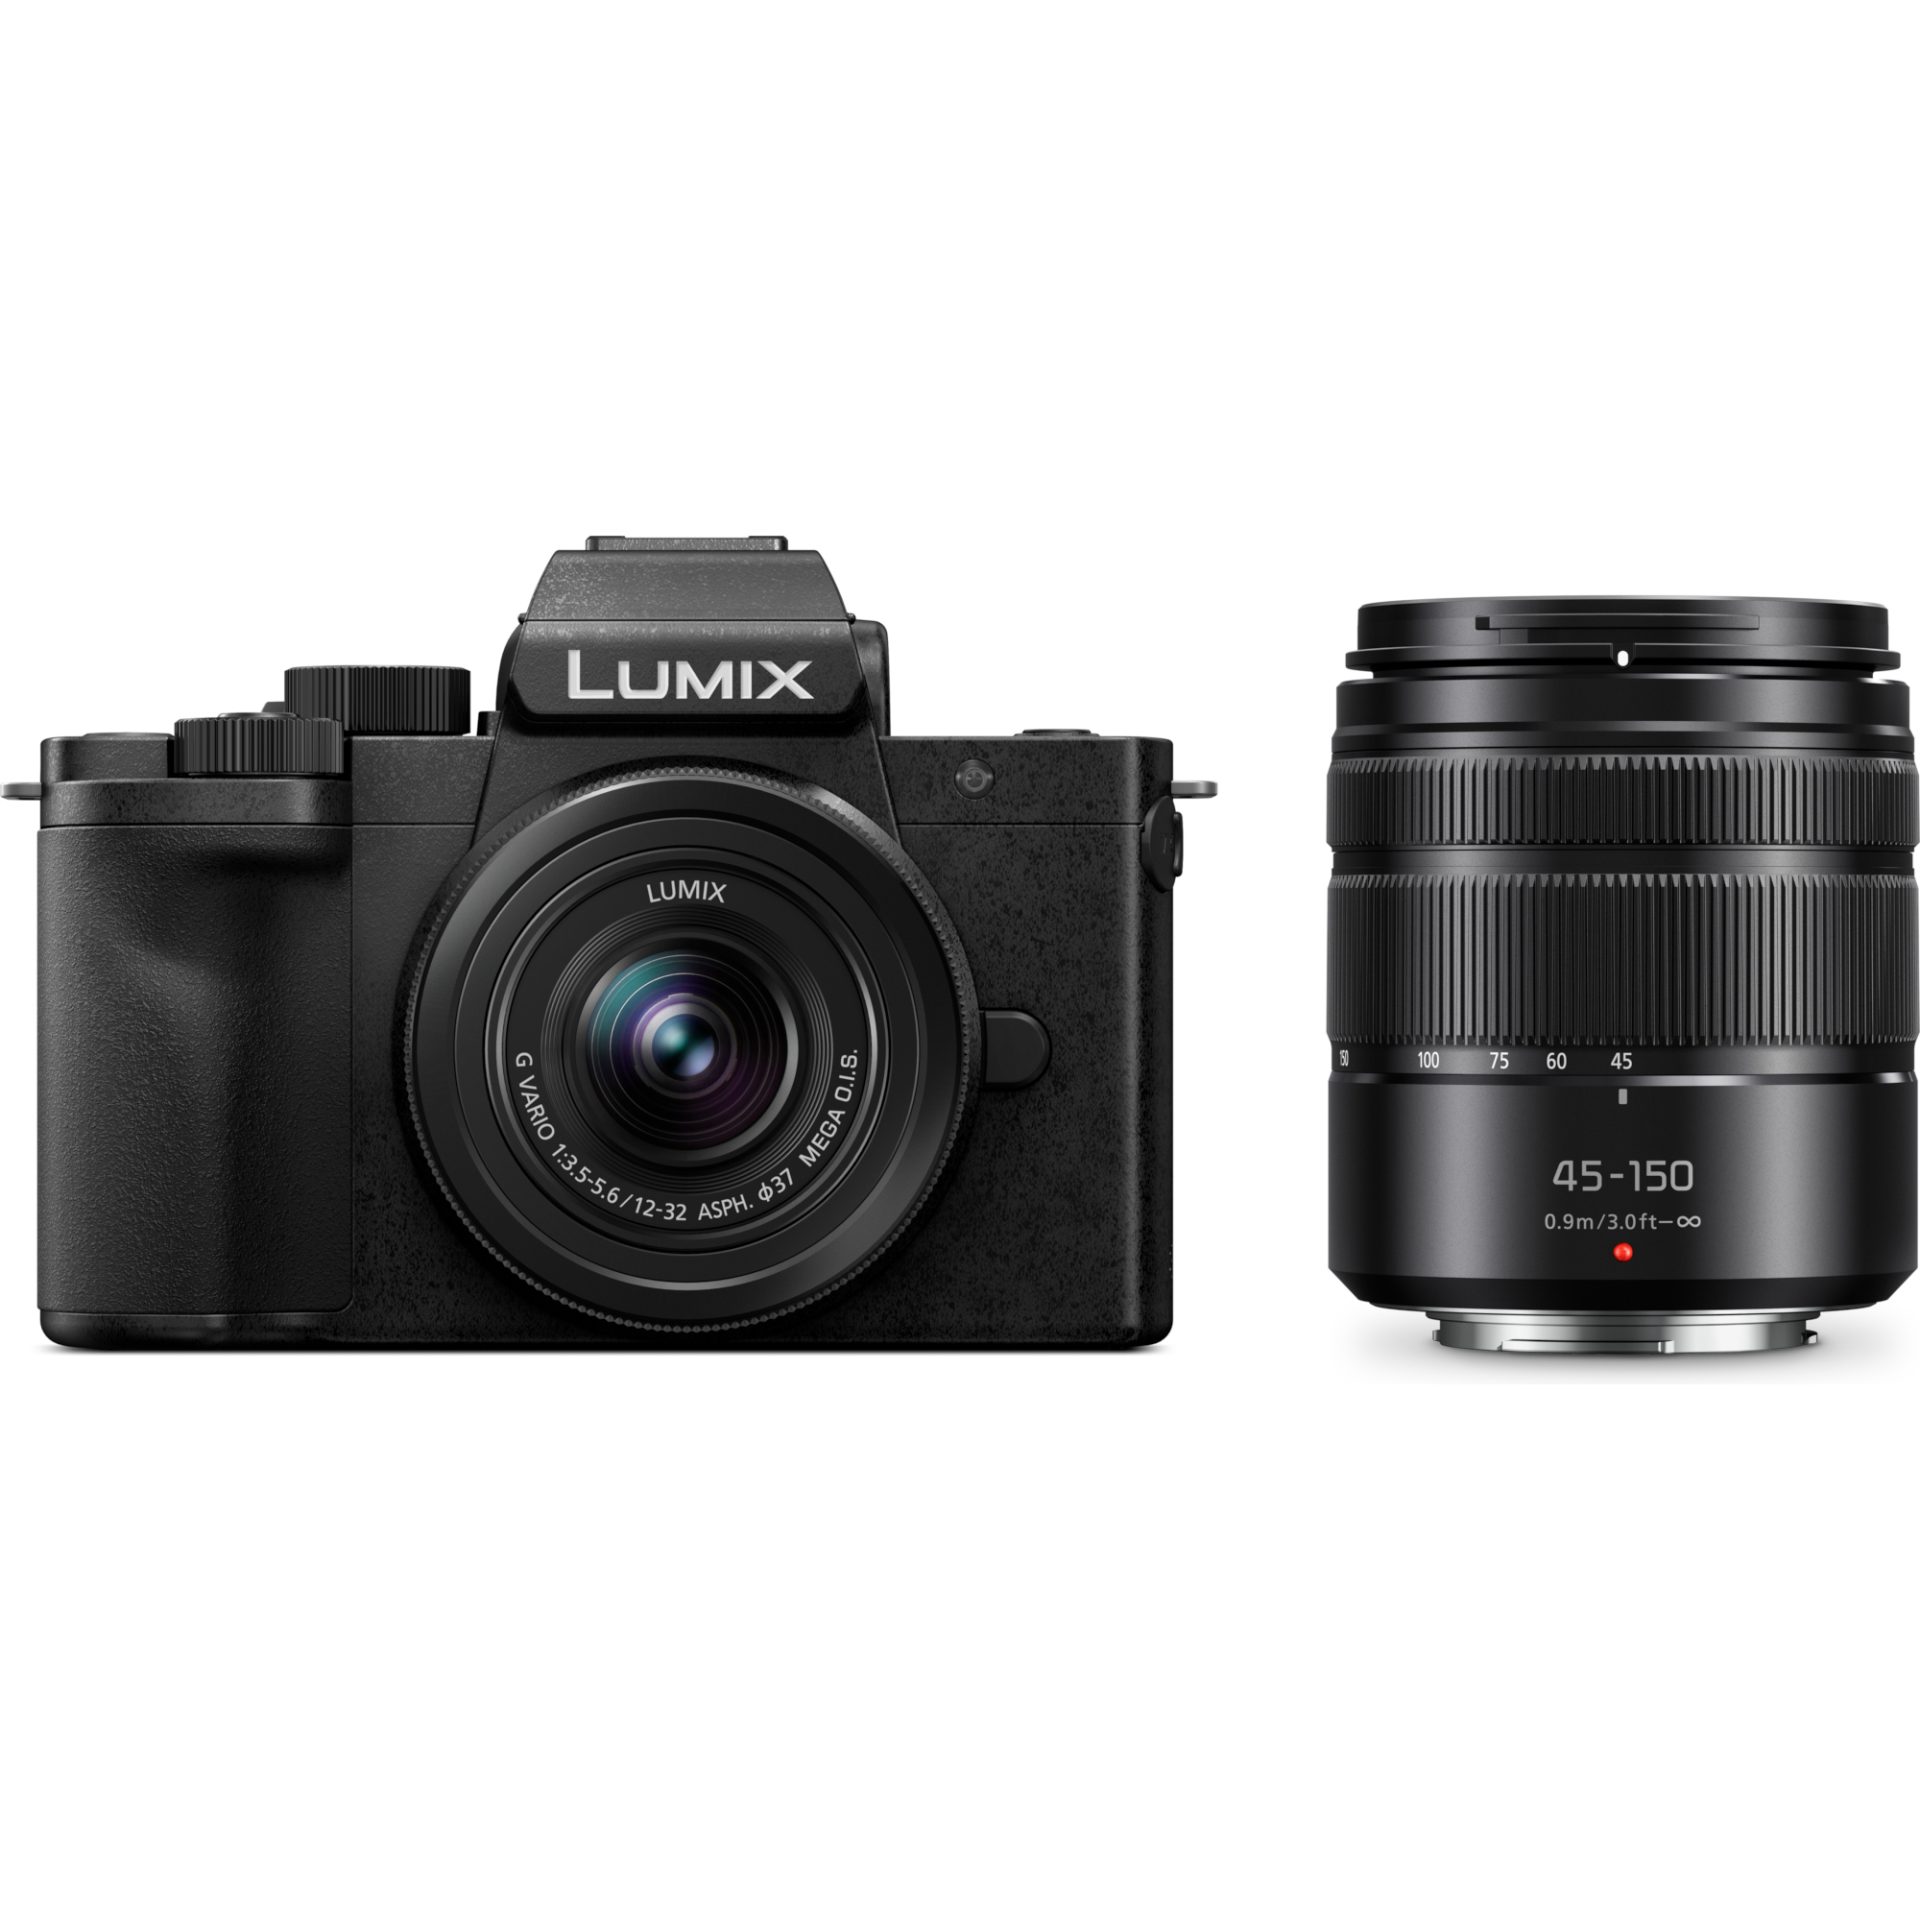 Panasonic DC-G100DW Lumix fotoaparát pro vlogery + objektivy H-FS12032 12-32mm, F3,5-5,6 a H-FS45150 45-100 mm, F4,0-5,6 (4K/30p a FHD/60p, USB typ C)